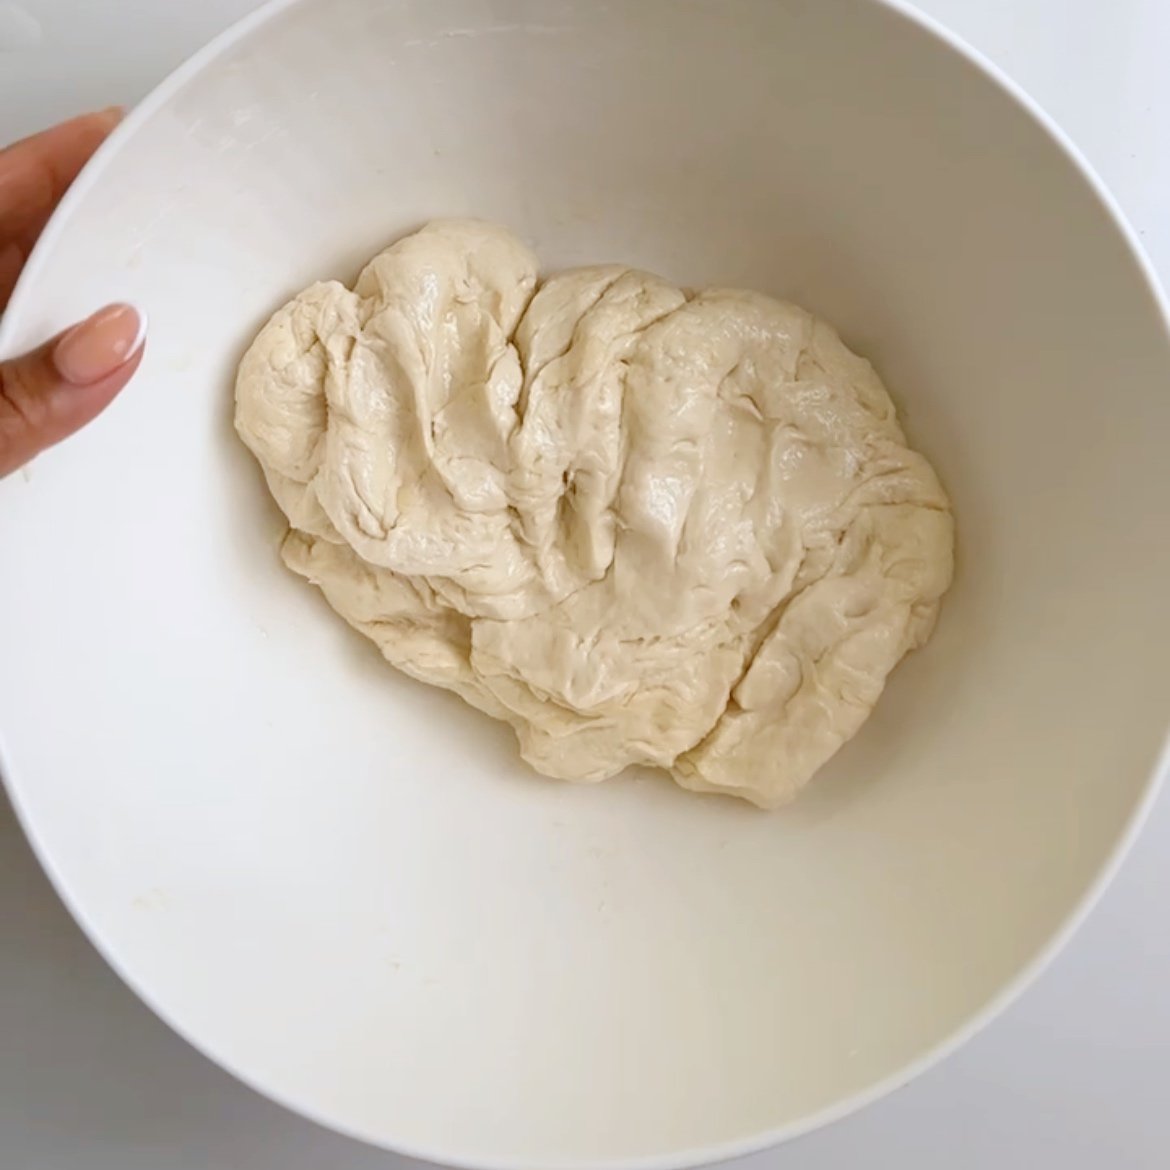 dhal puri dough in a bowl